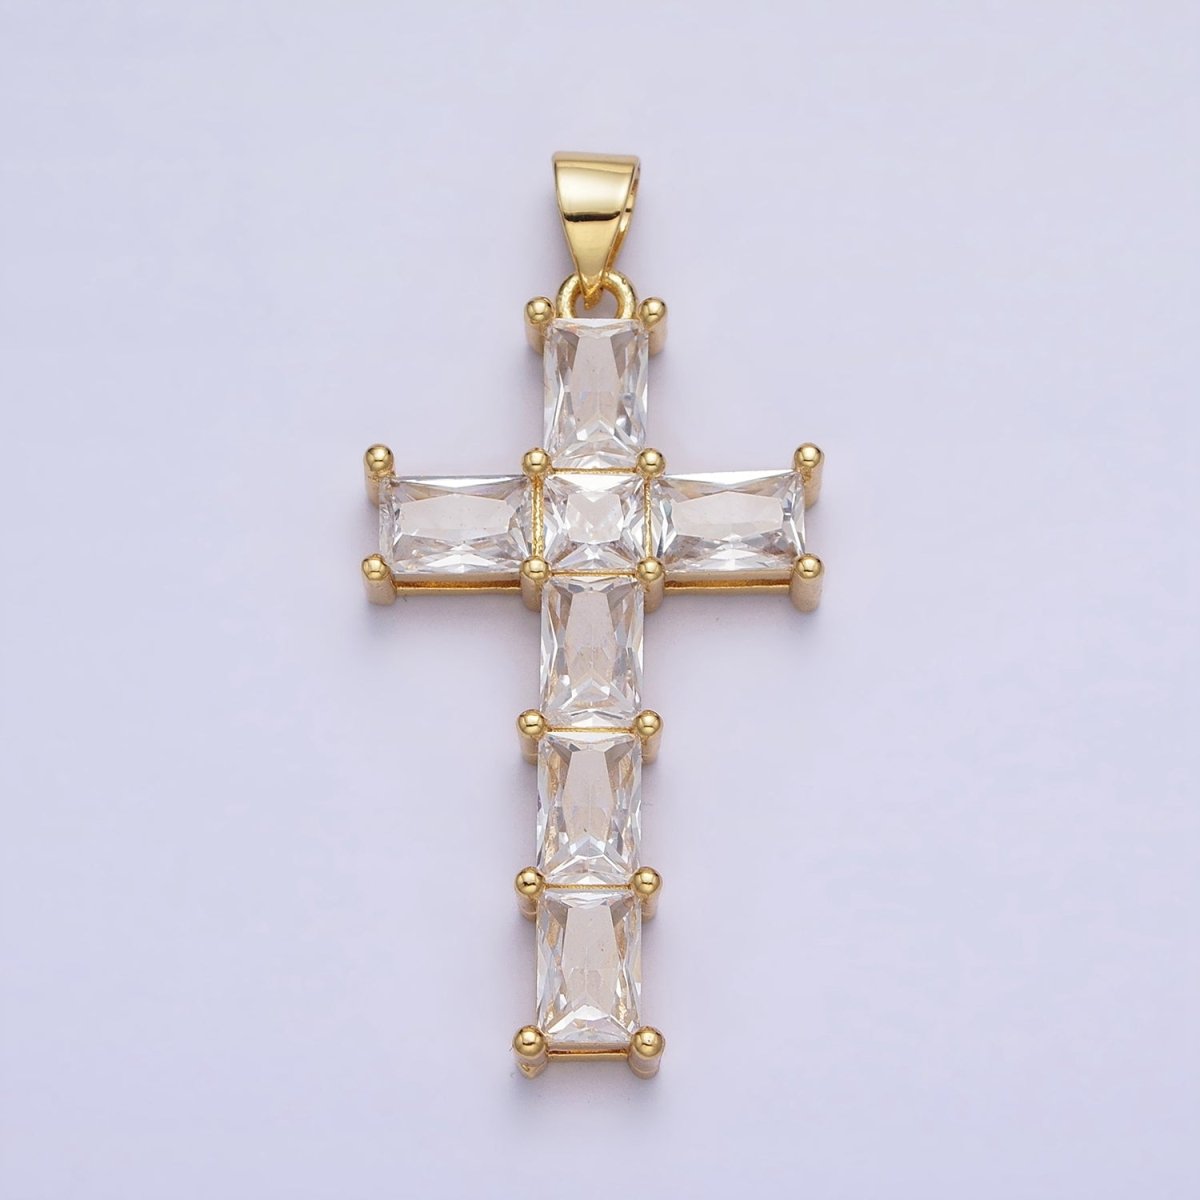 Gold Cross Pendant with Emerald Cut CZ Diamond for Religious Jewelry Charm AA255 - DLUXCA